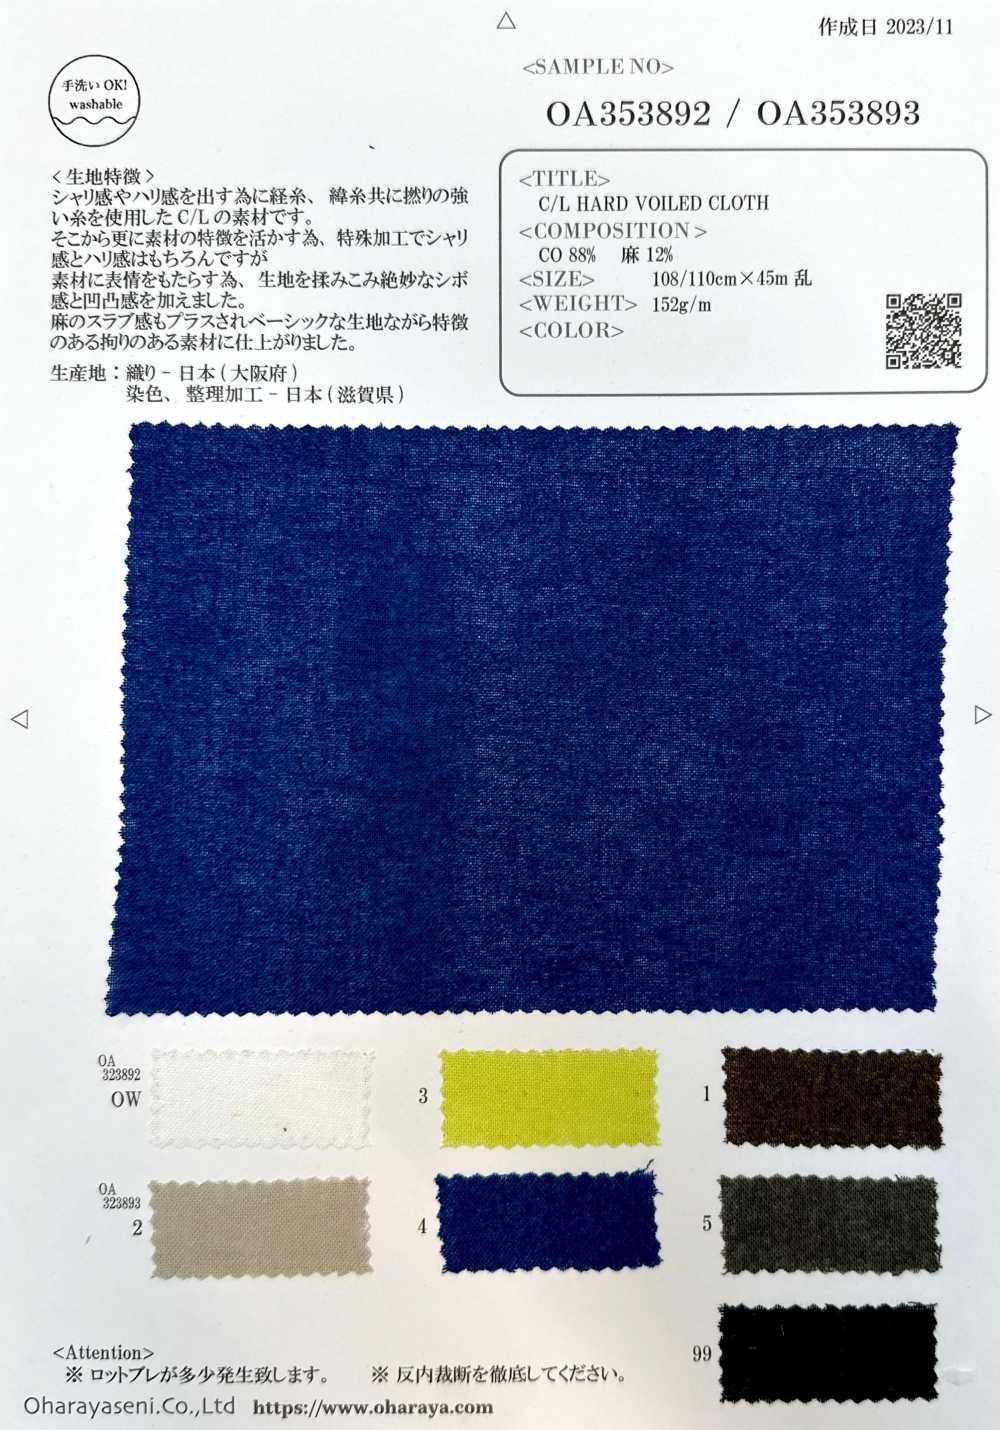 OA353893 C/L HARTES VOILED-TUCH[Textilgewebe] Oharayaseni